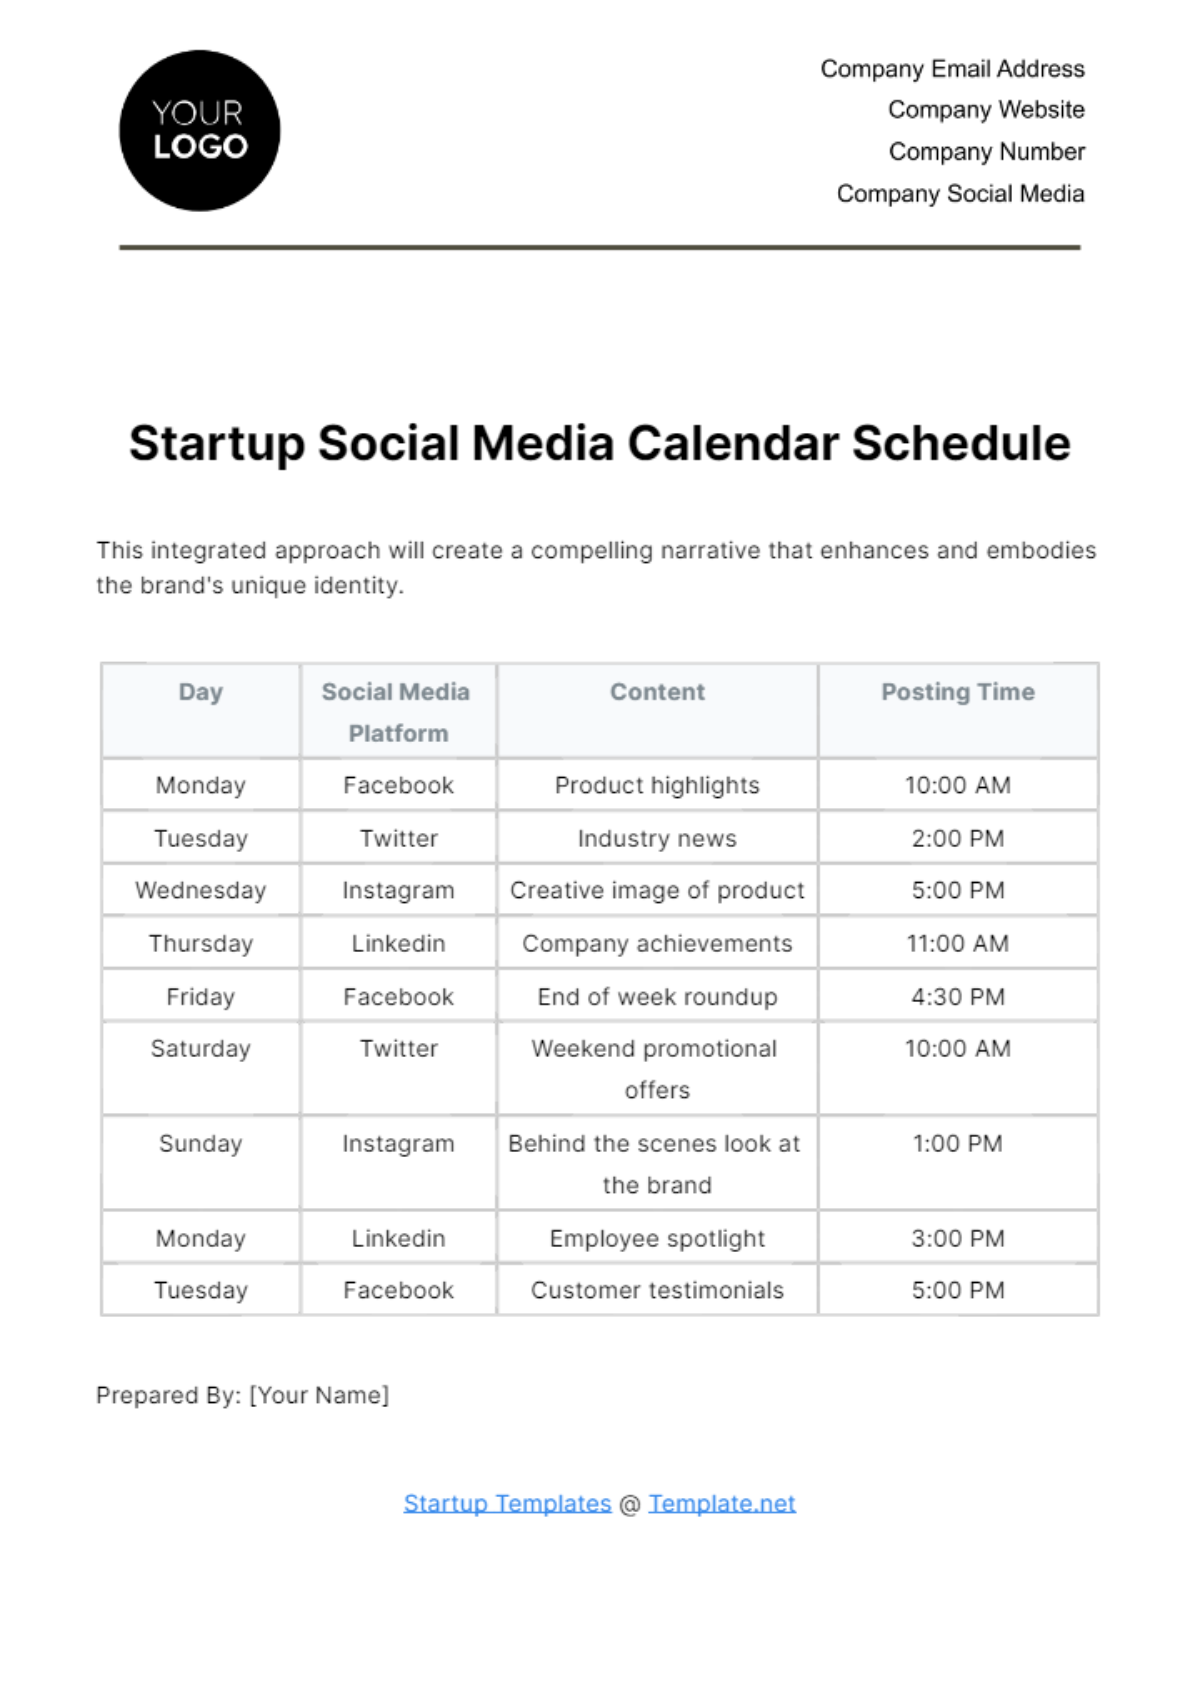 Startup Social Media Calendar Schedule Template